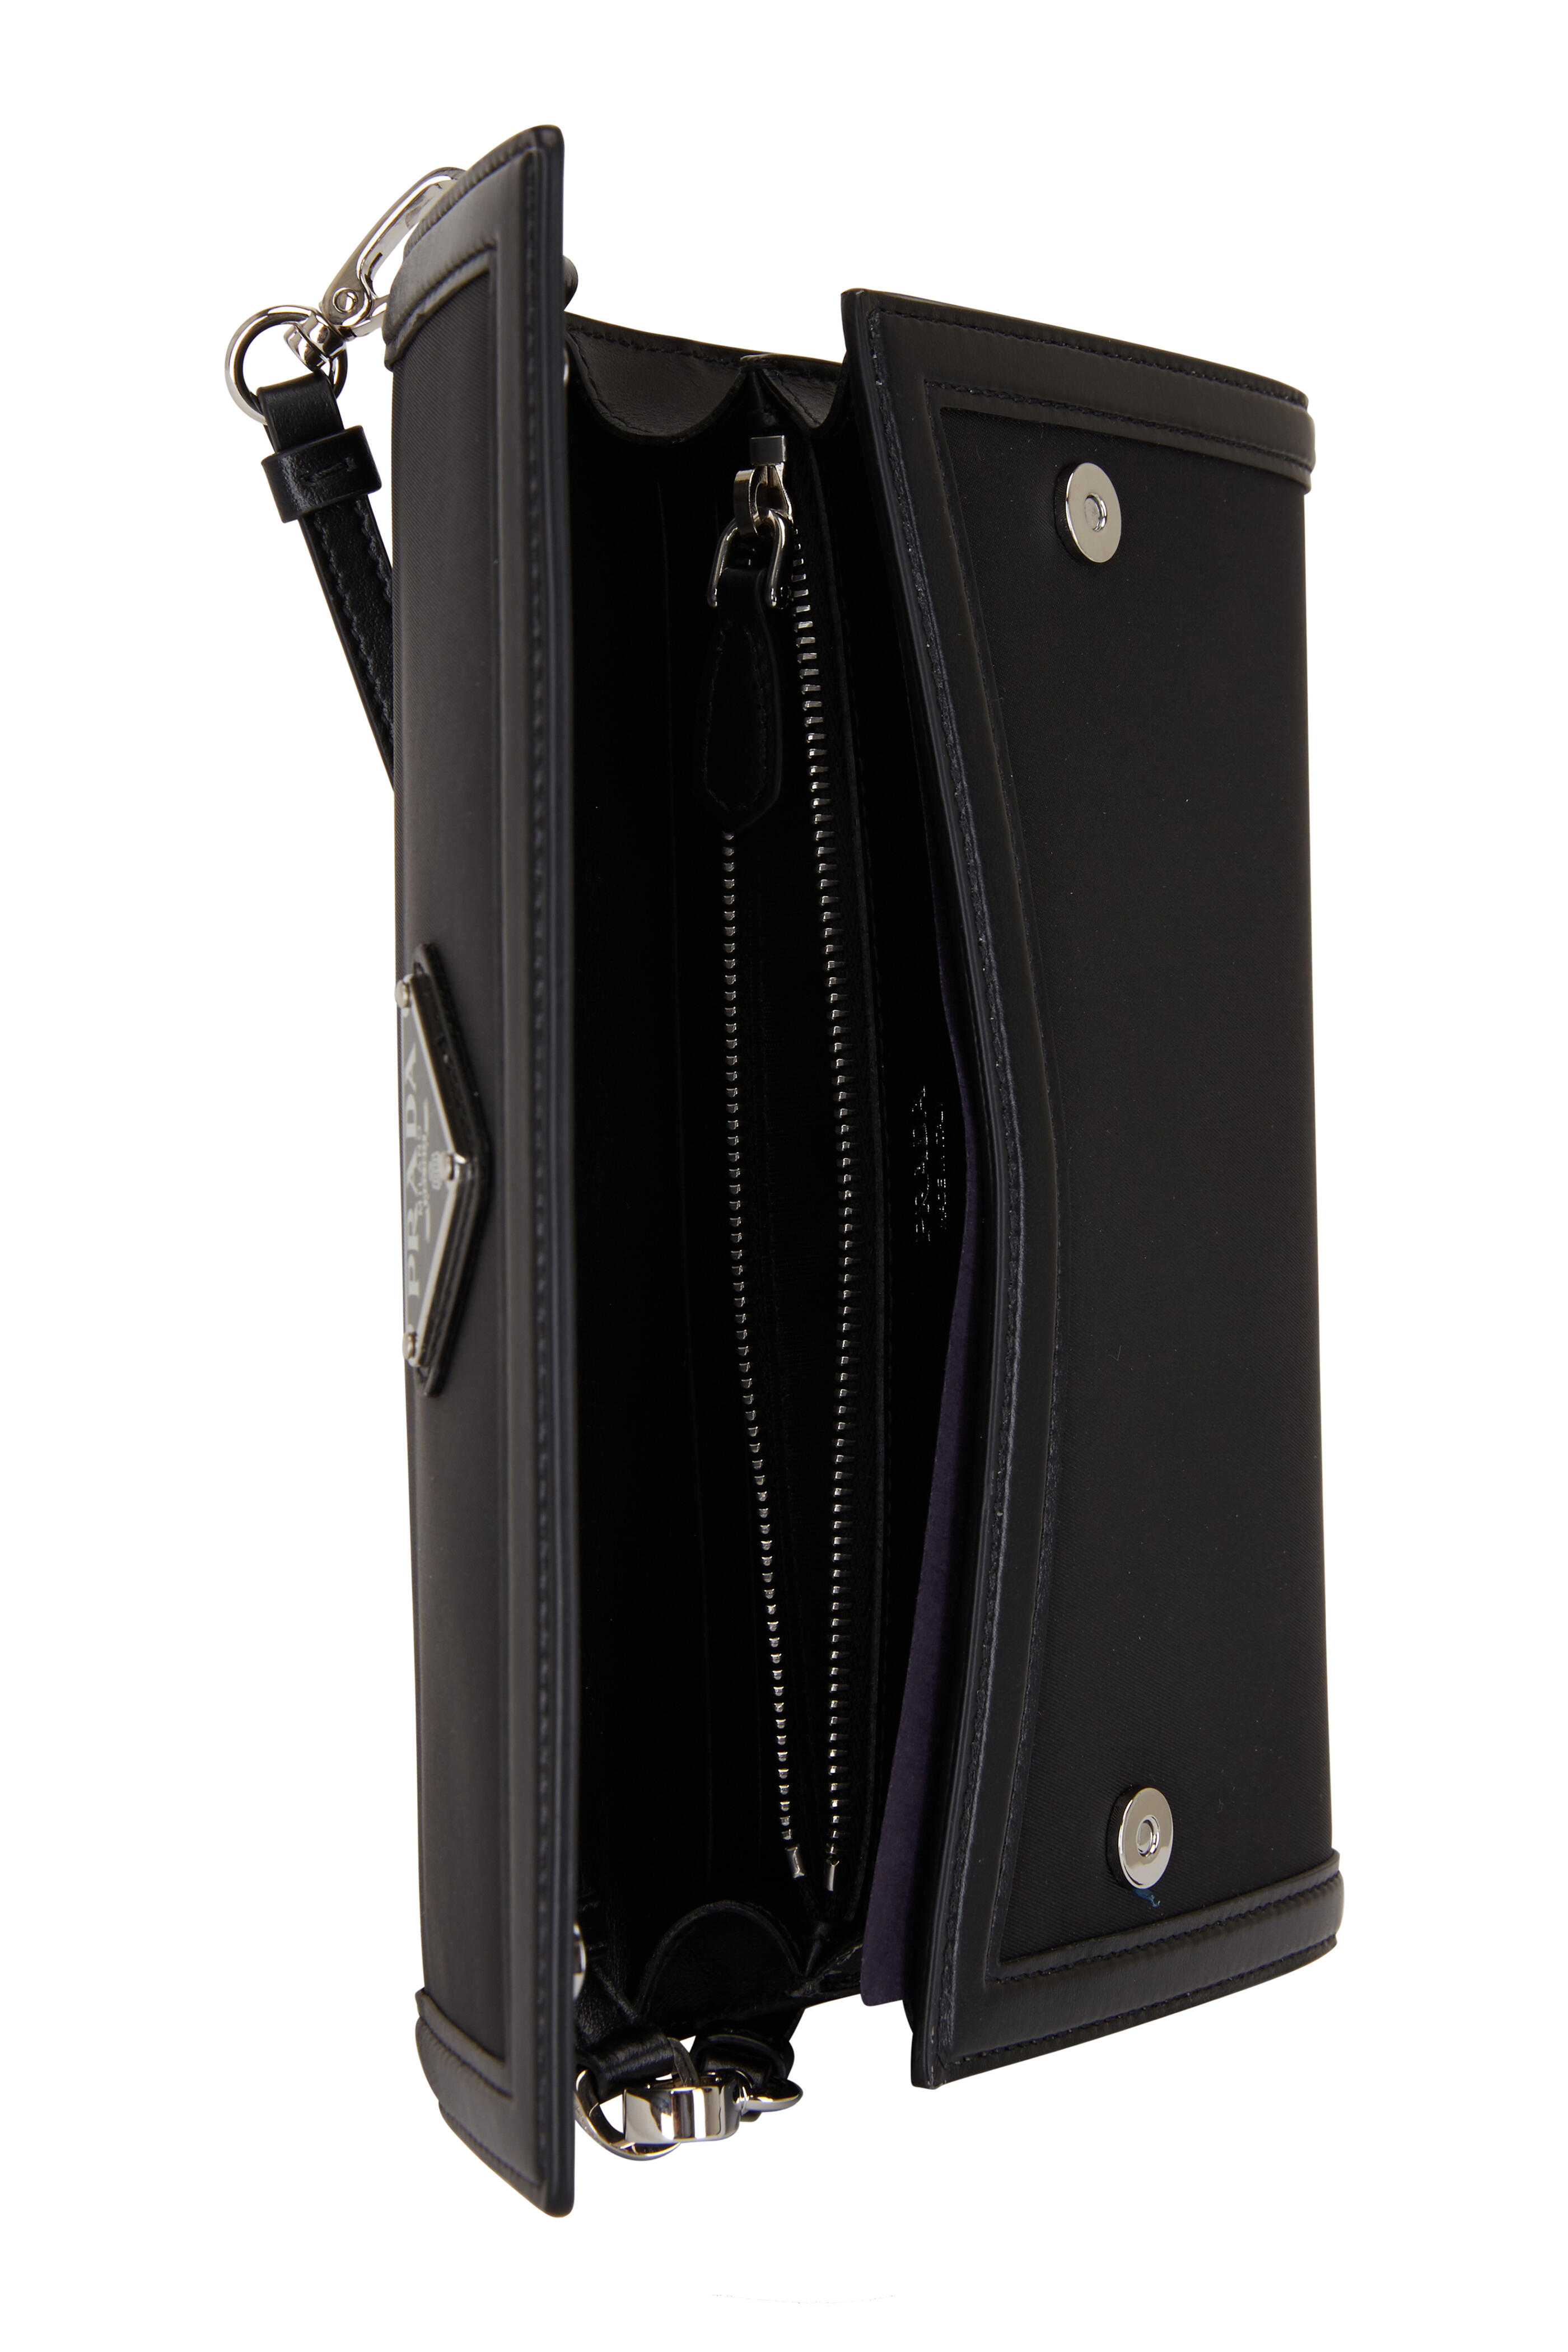 Prada Saffiano leather wallet with shoulder strap